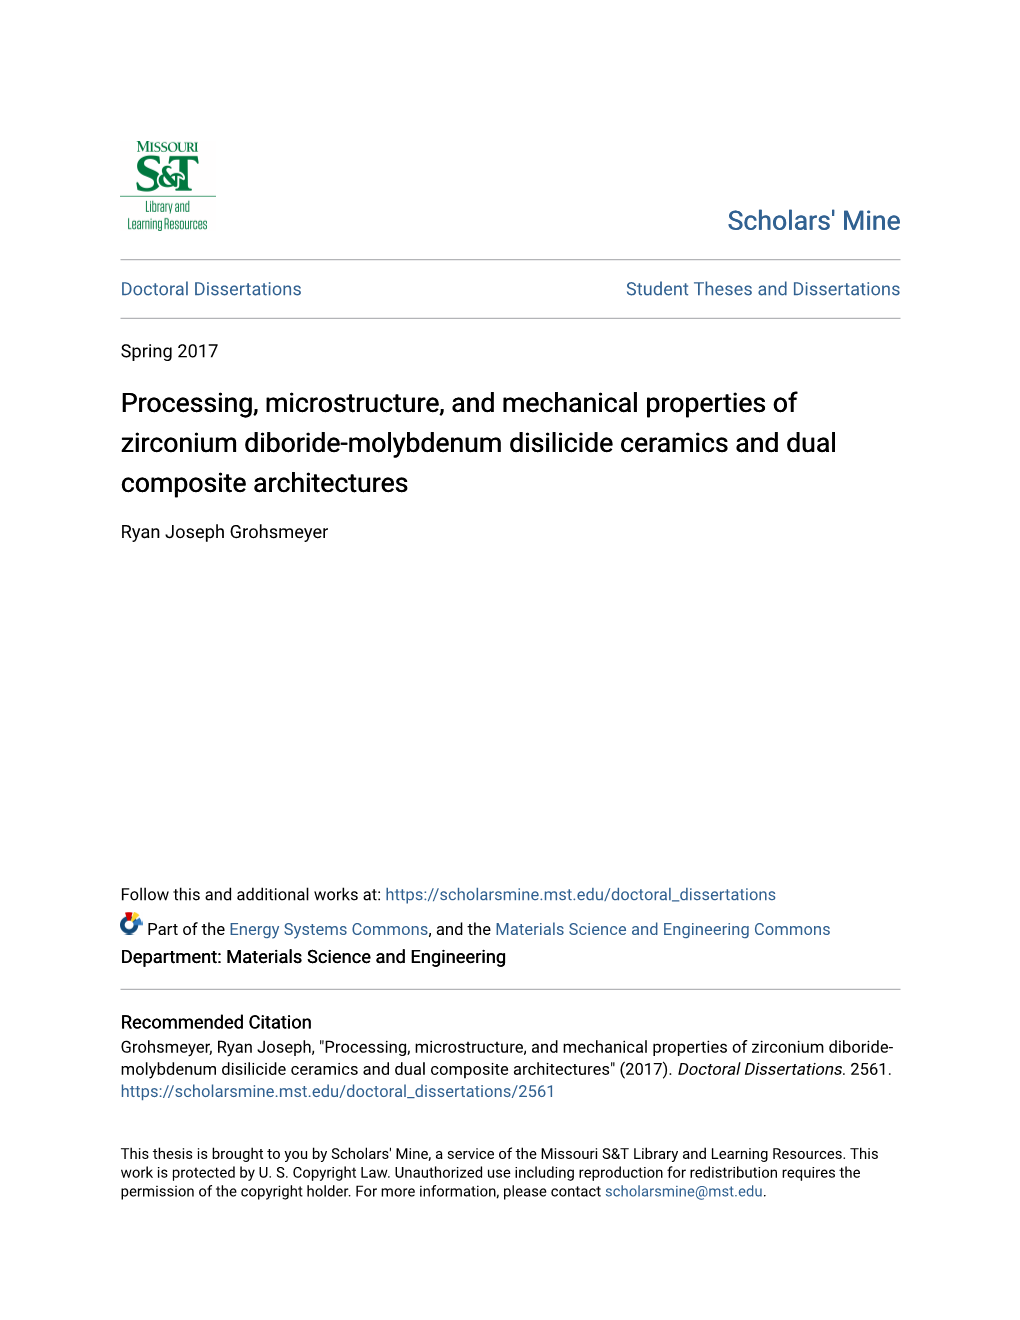 Processing, Microstructure, and Mechanical Properties of Zirconium Diboride-Molybdenum Disilicide Ceramics and Dual Composite Architectures